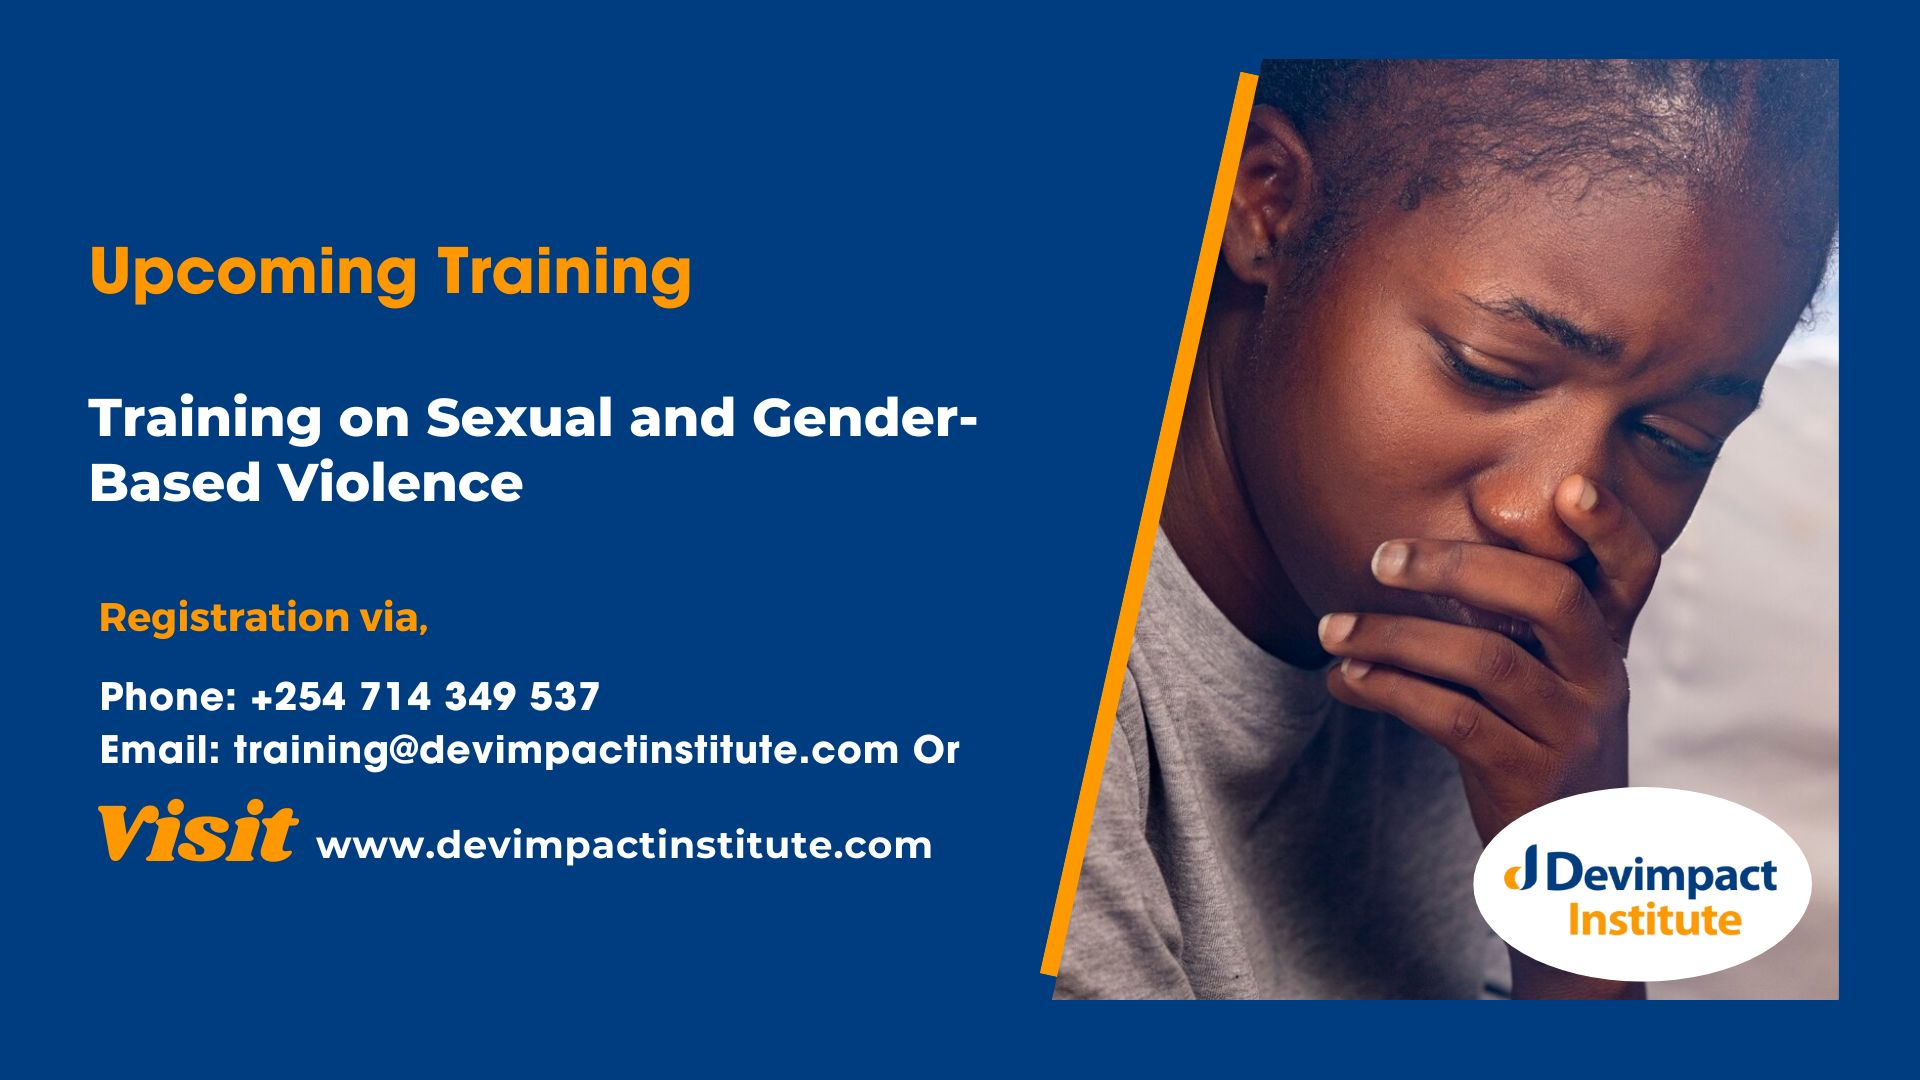 Training on Sexual and Gender-Based Violence, Devimpact Institute, Nairobi, Kenya